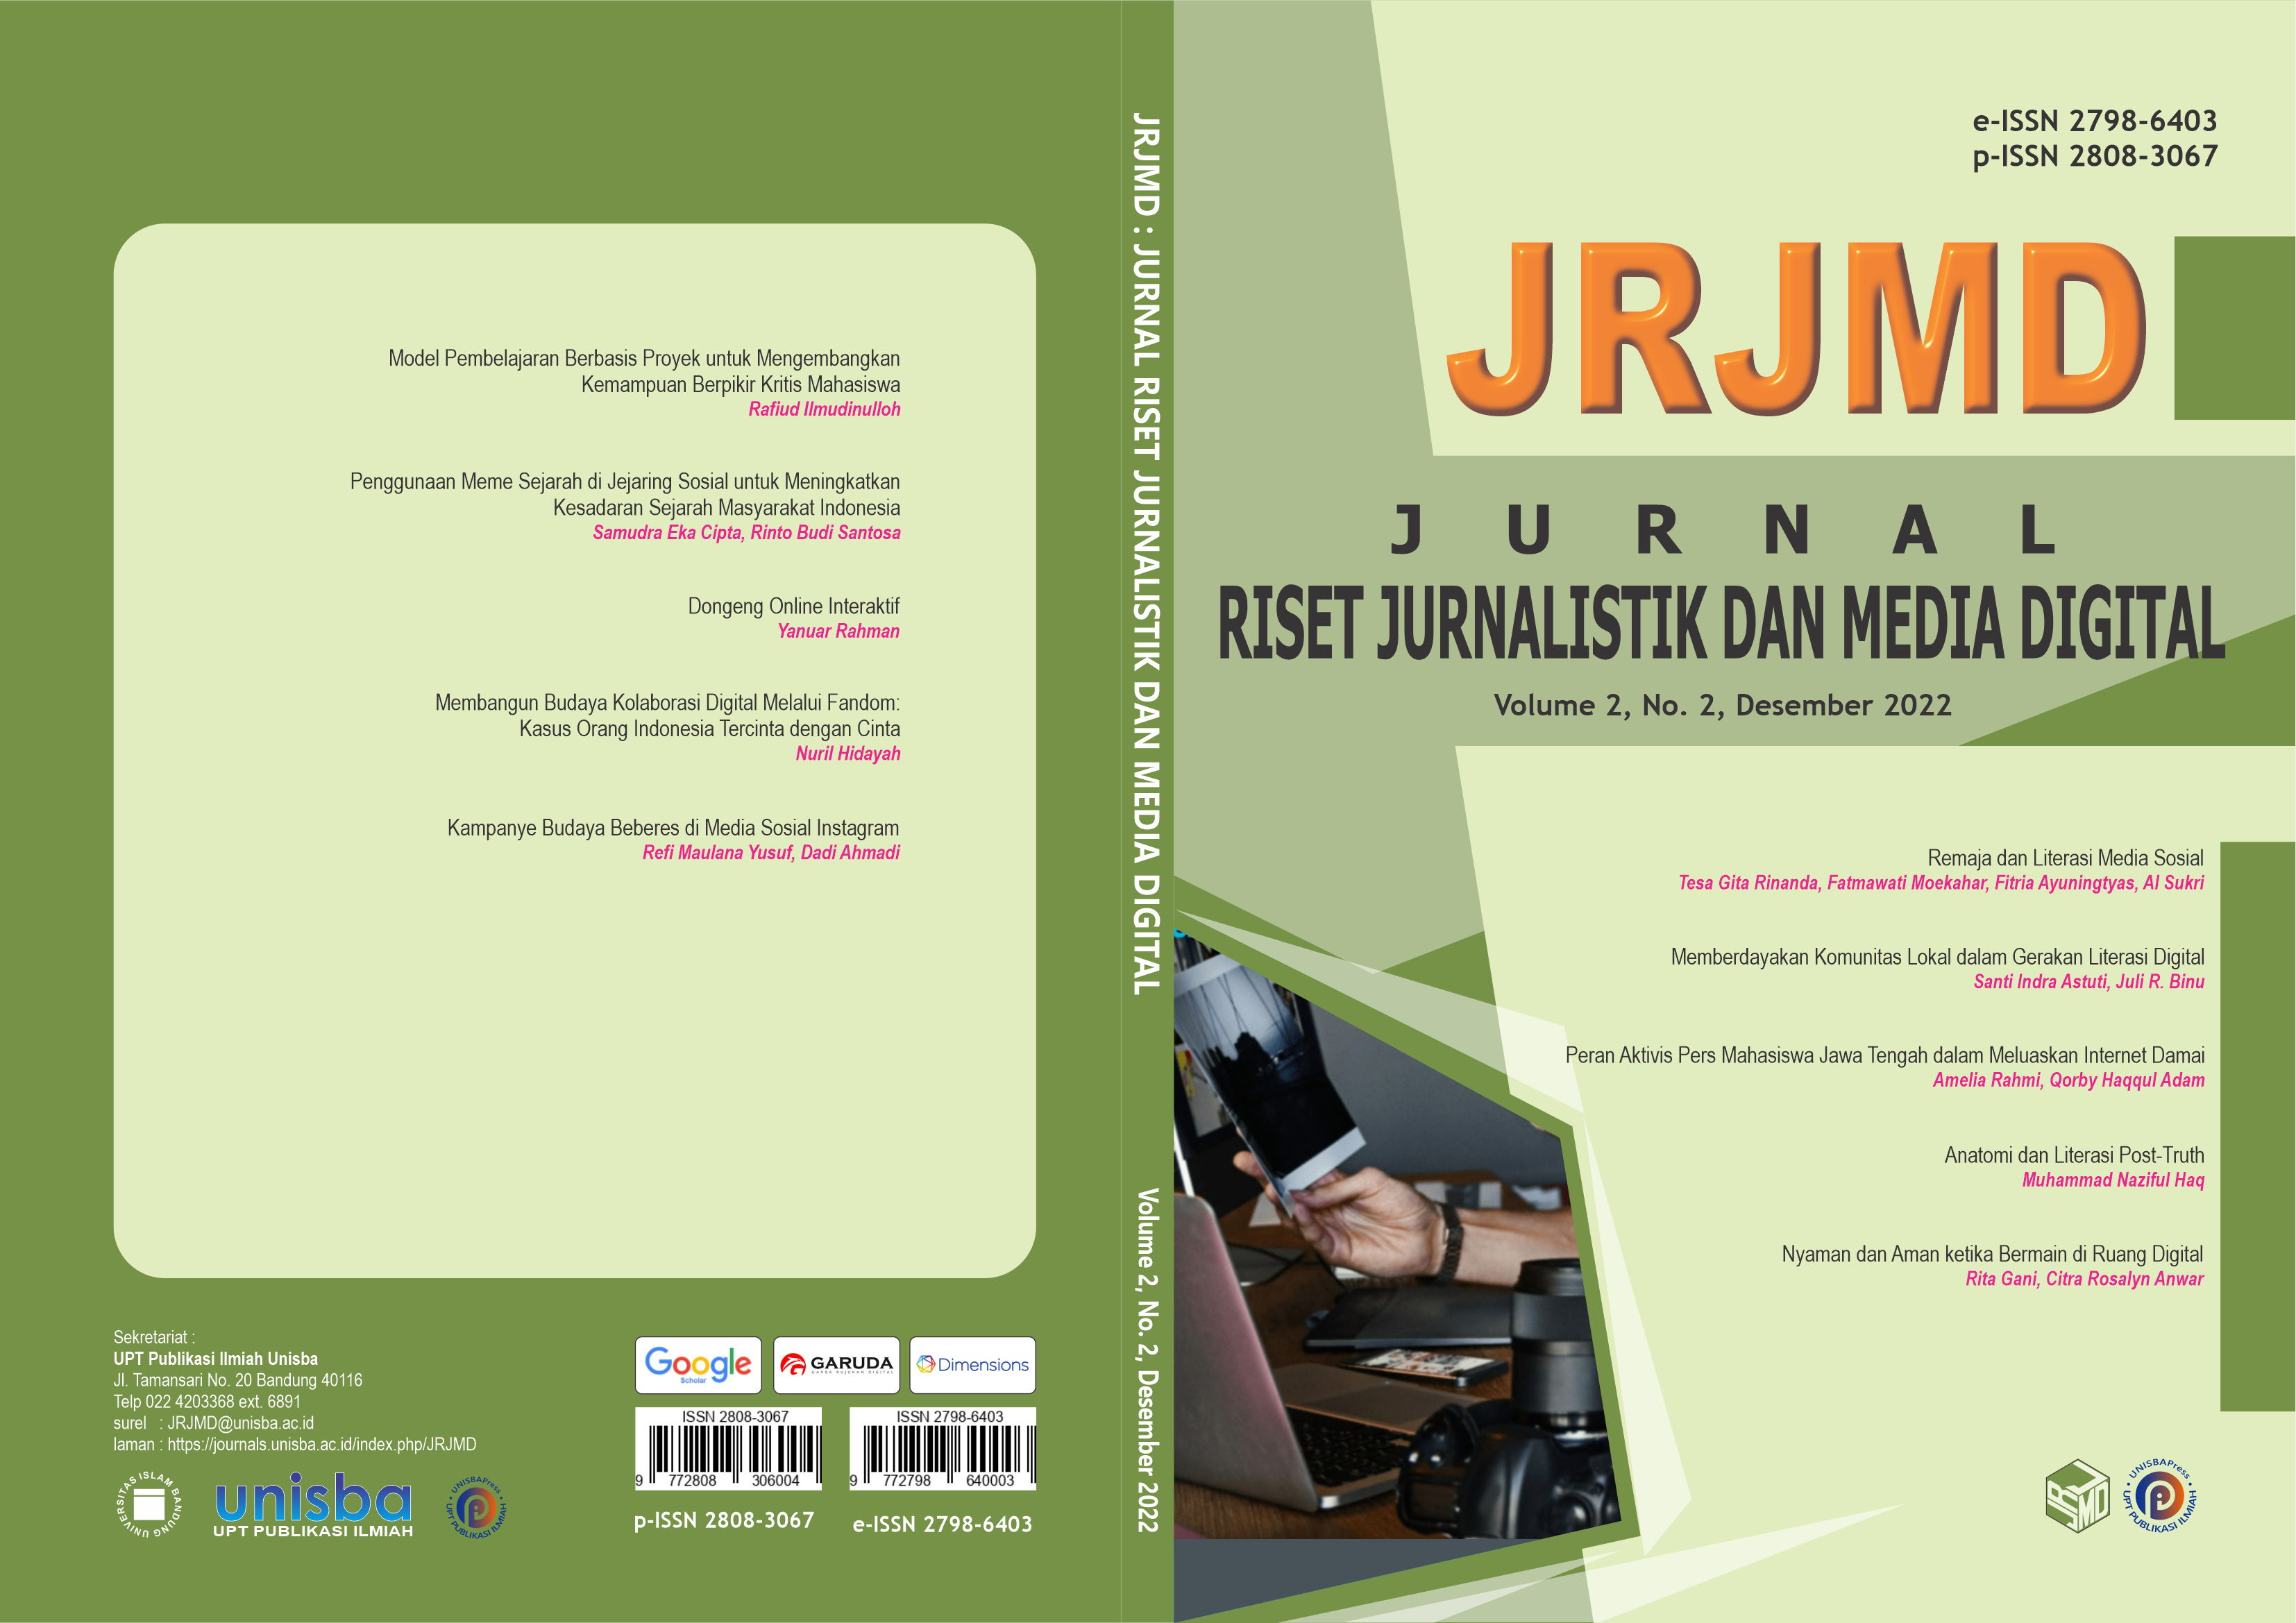 					View Volume 2, No. 2, Desember 2022 Jurnal Riset Jurnalistik dan Media Digital (JRJMD)
				